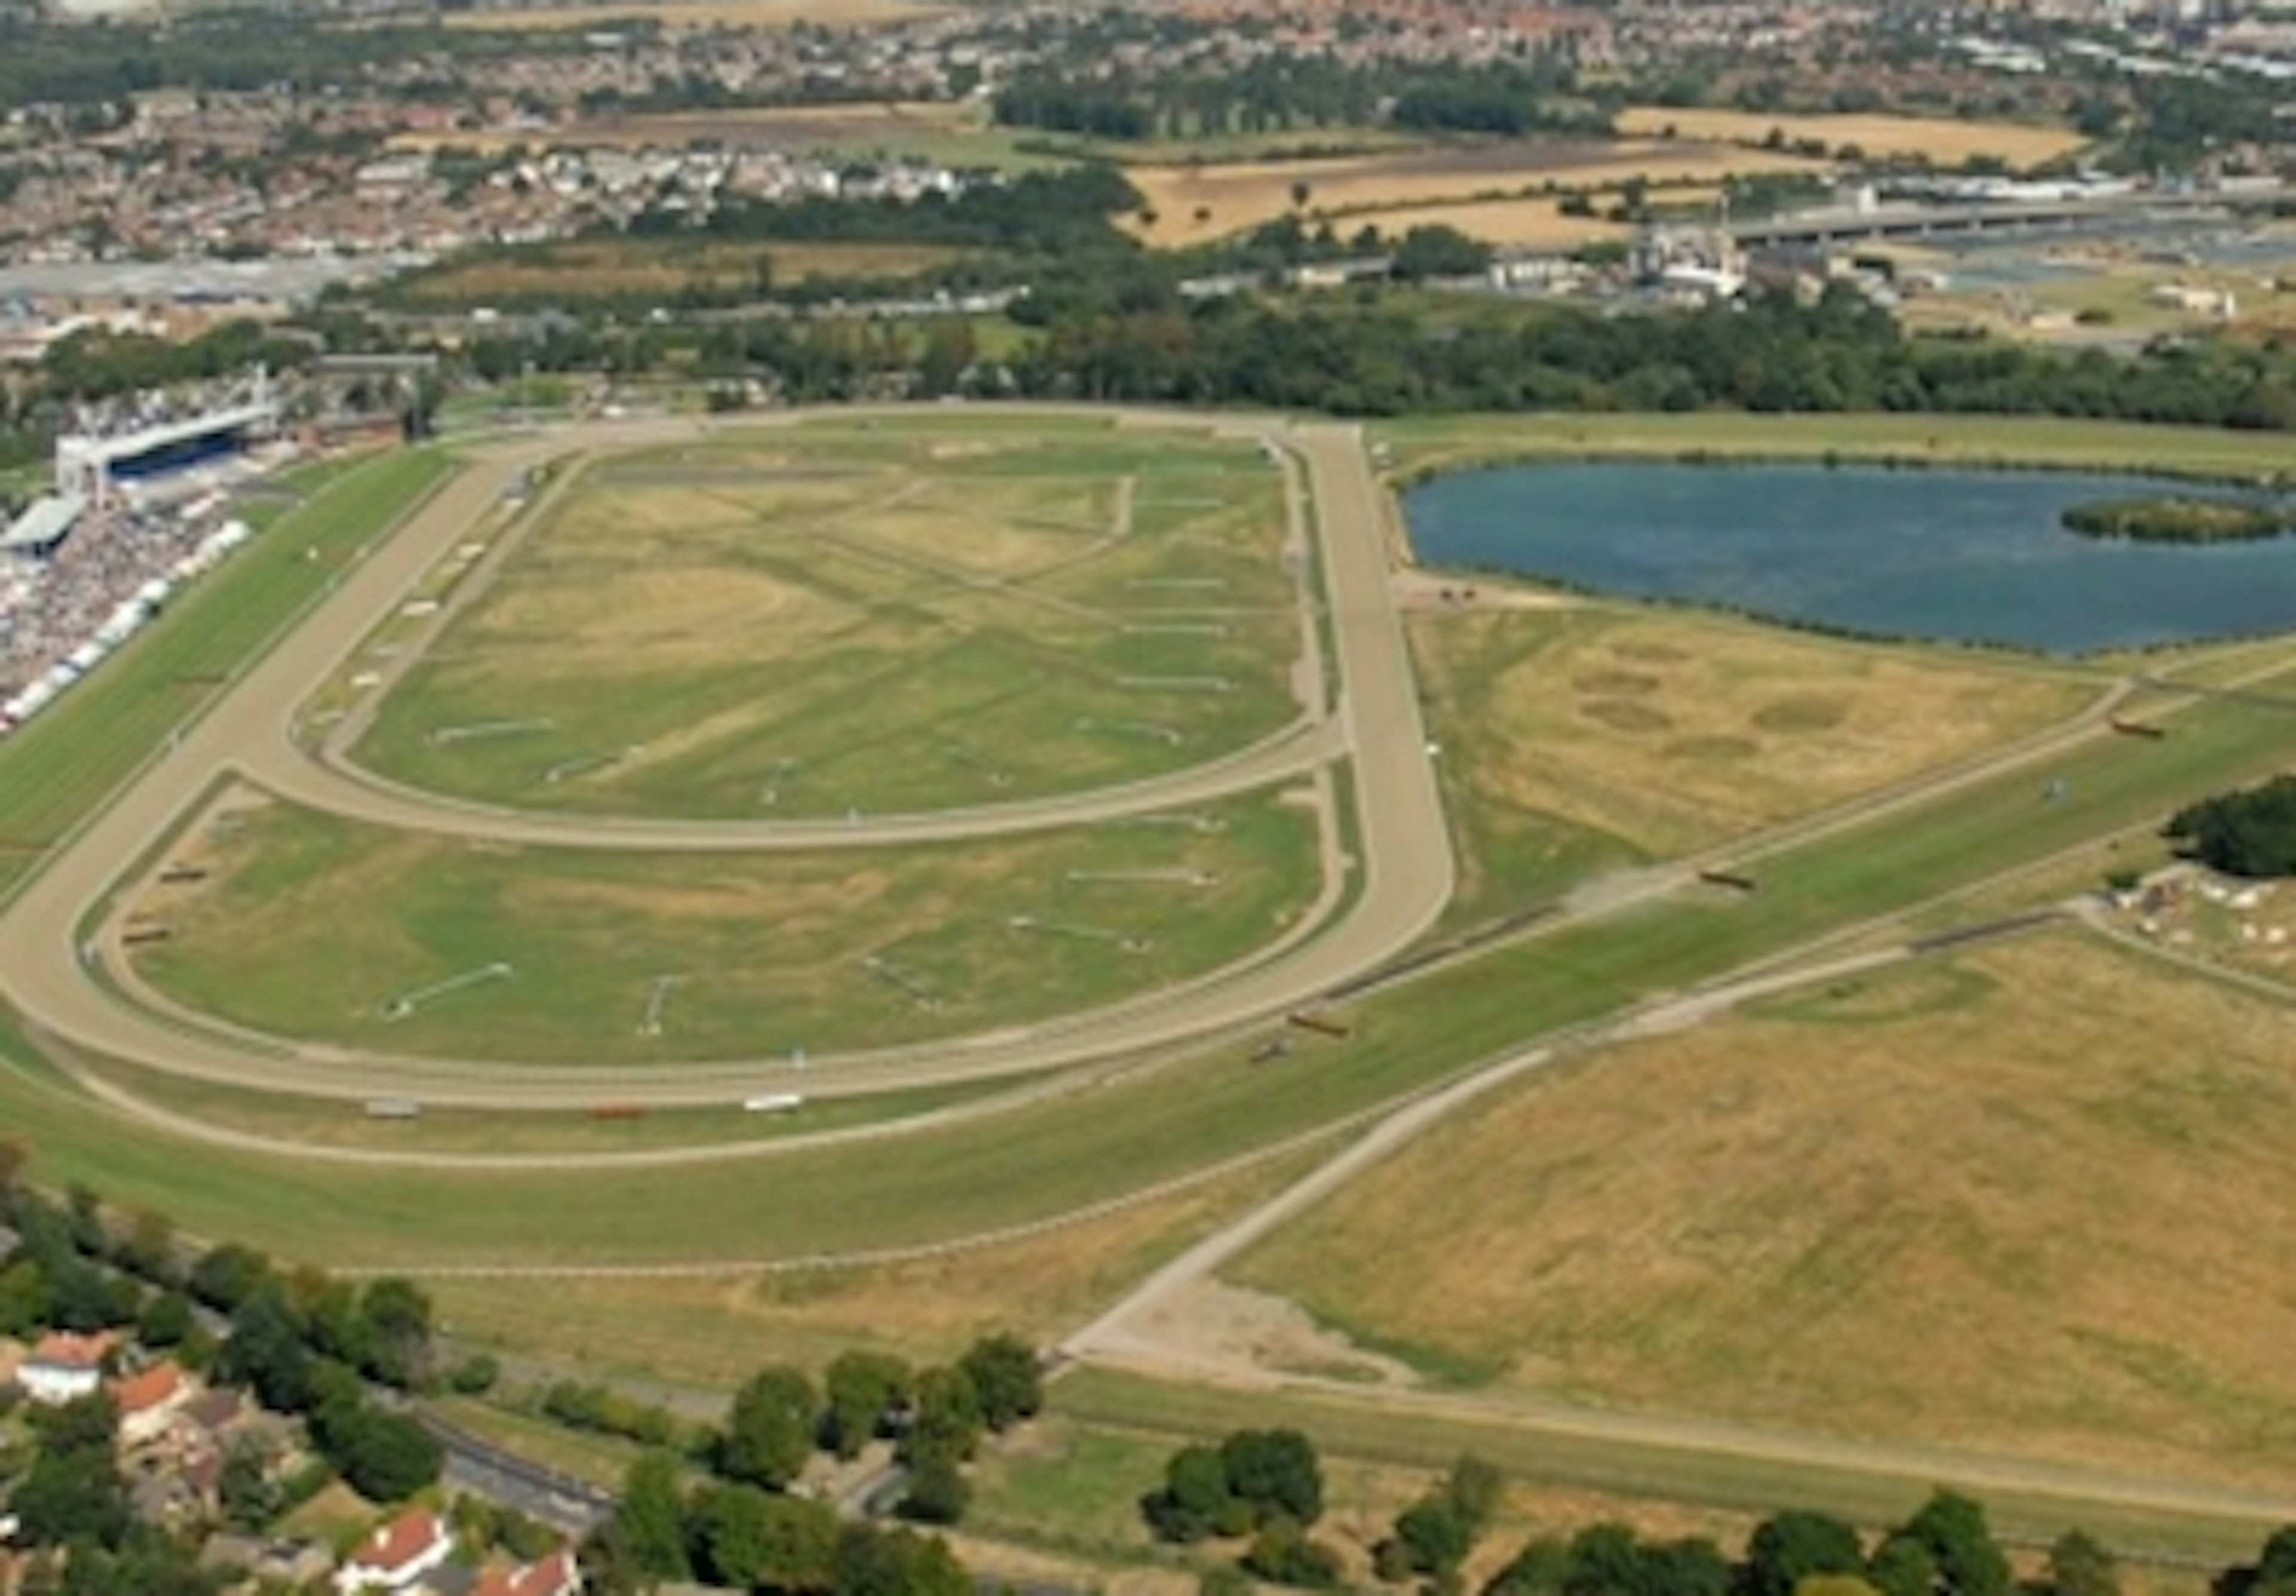 Business - Kempton Park Racecourse